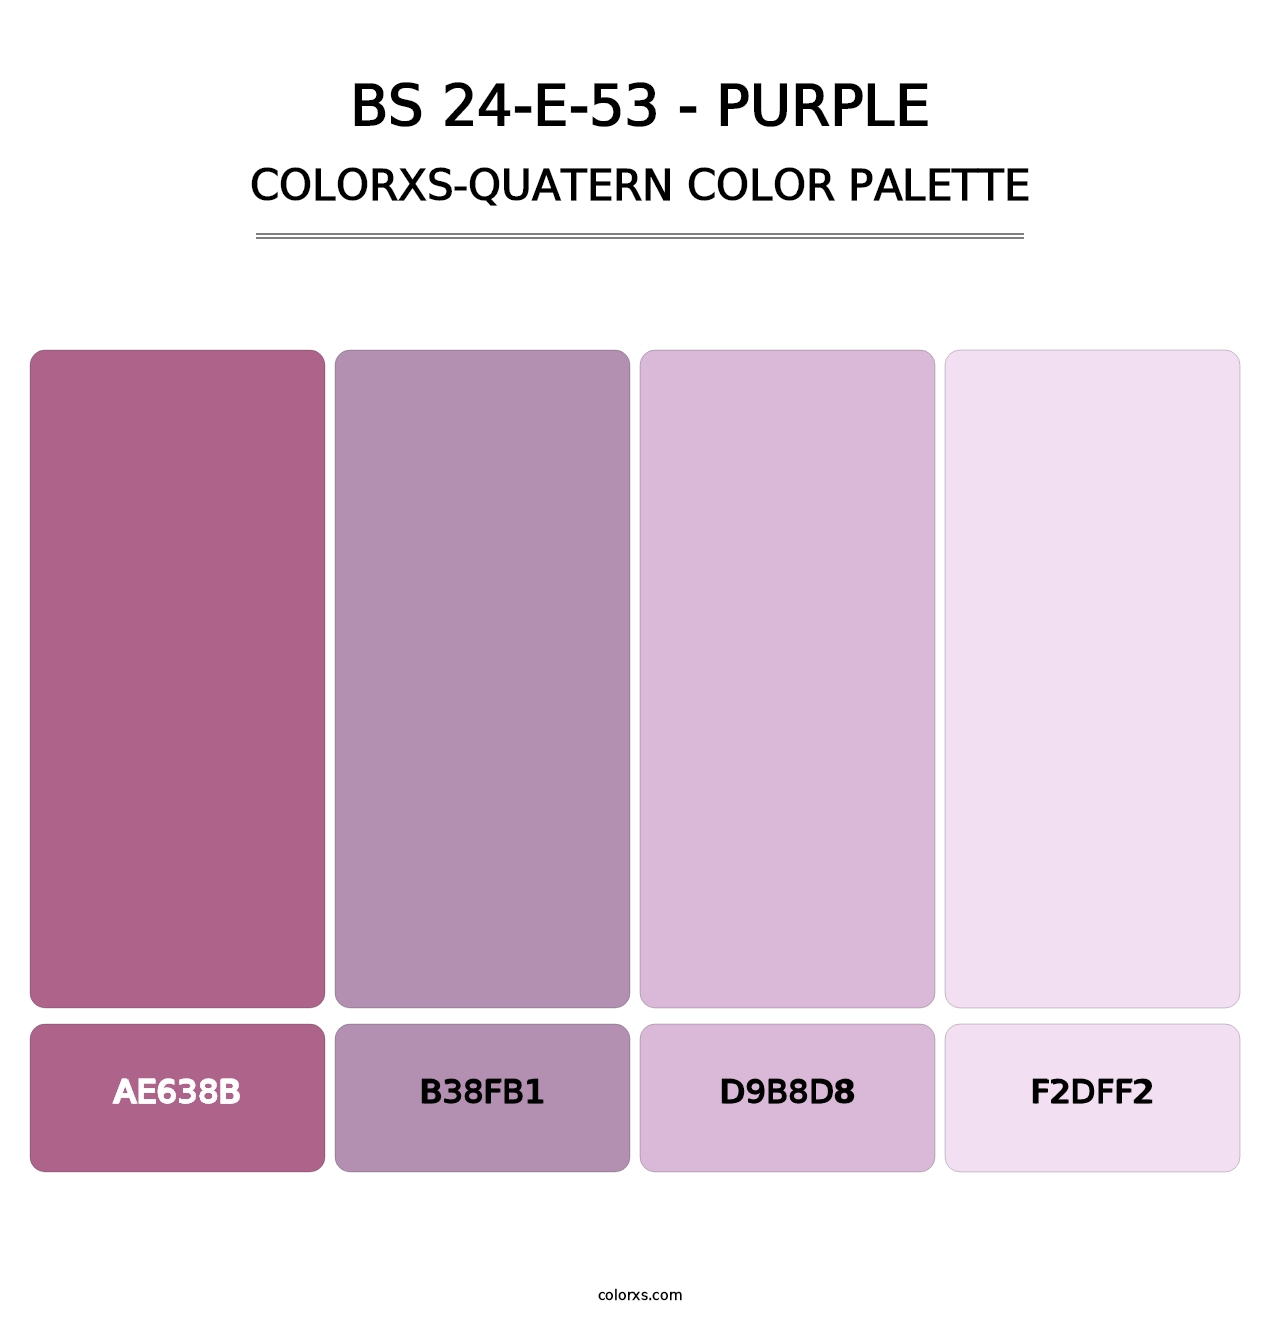 BS 24-E-53 - Purple - Colorxs Quatern Palette